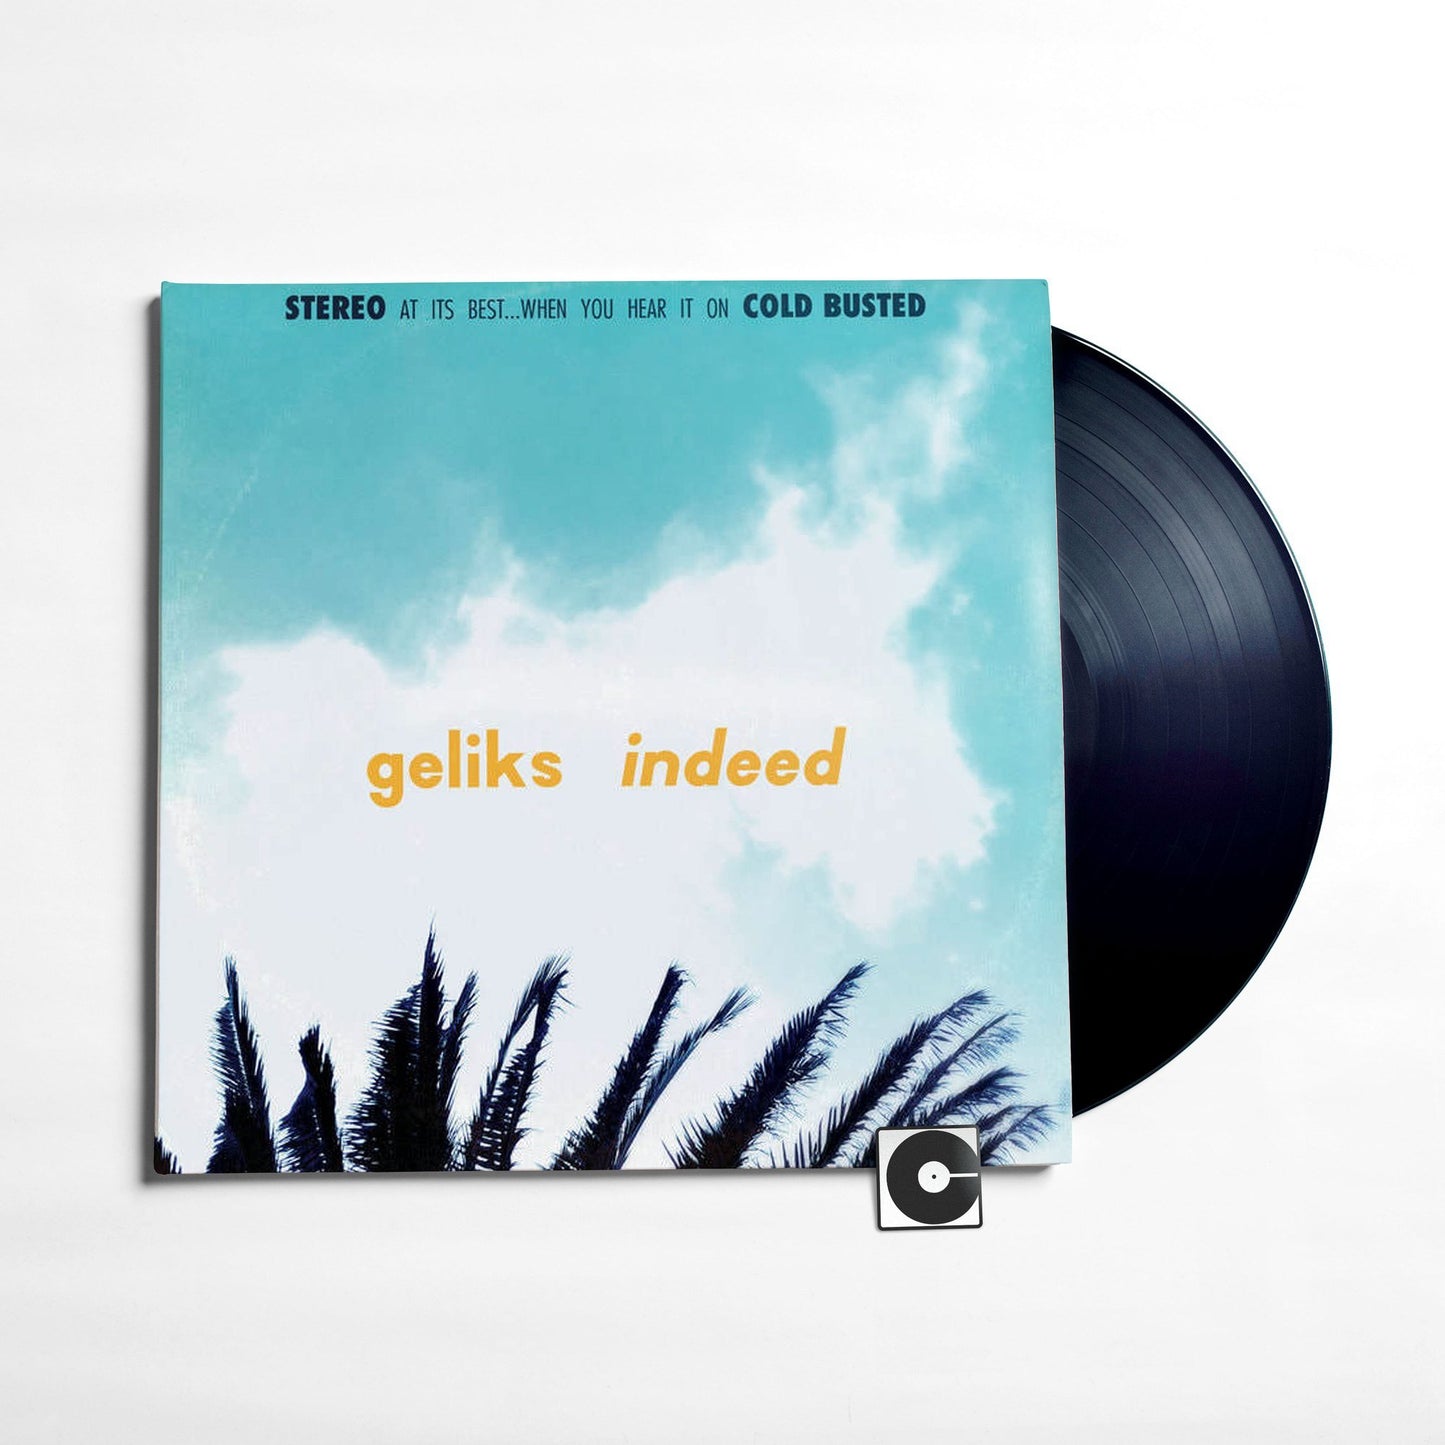 Geliks - "Indeed"